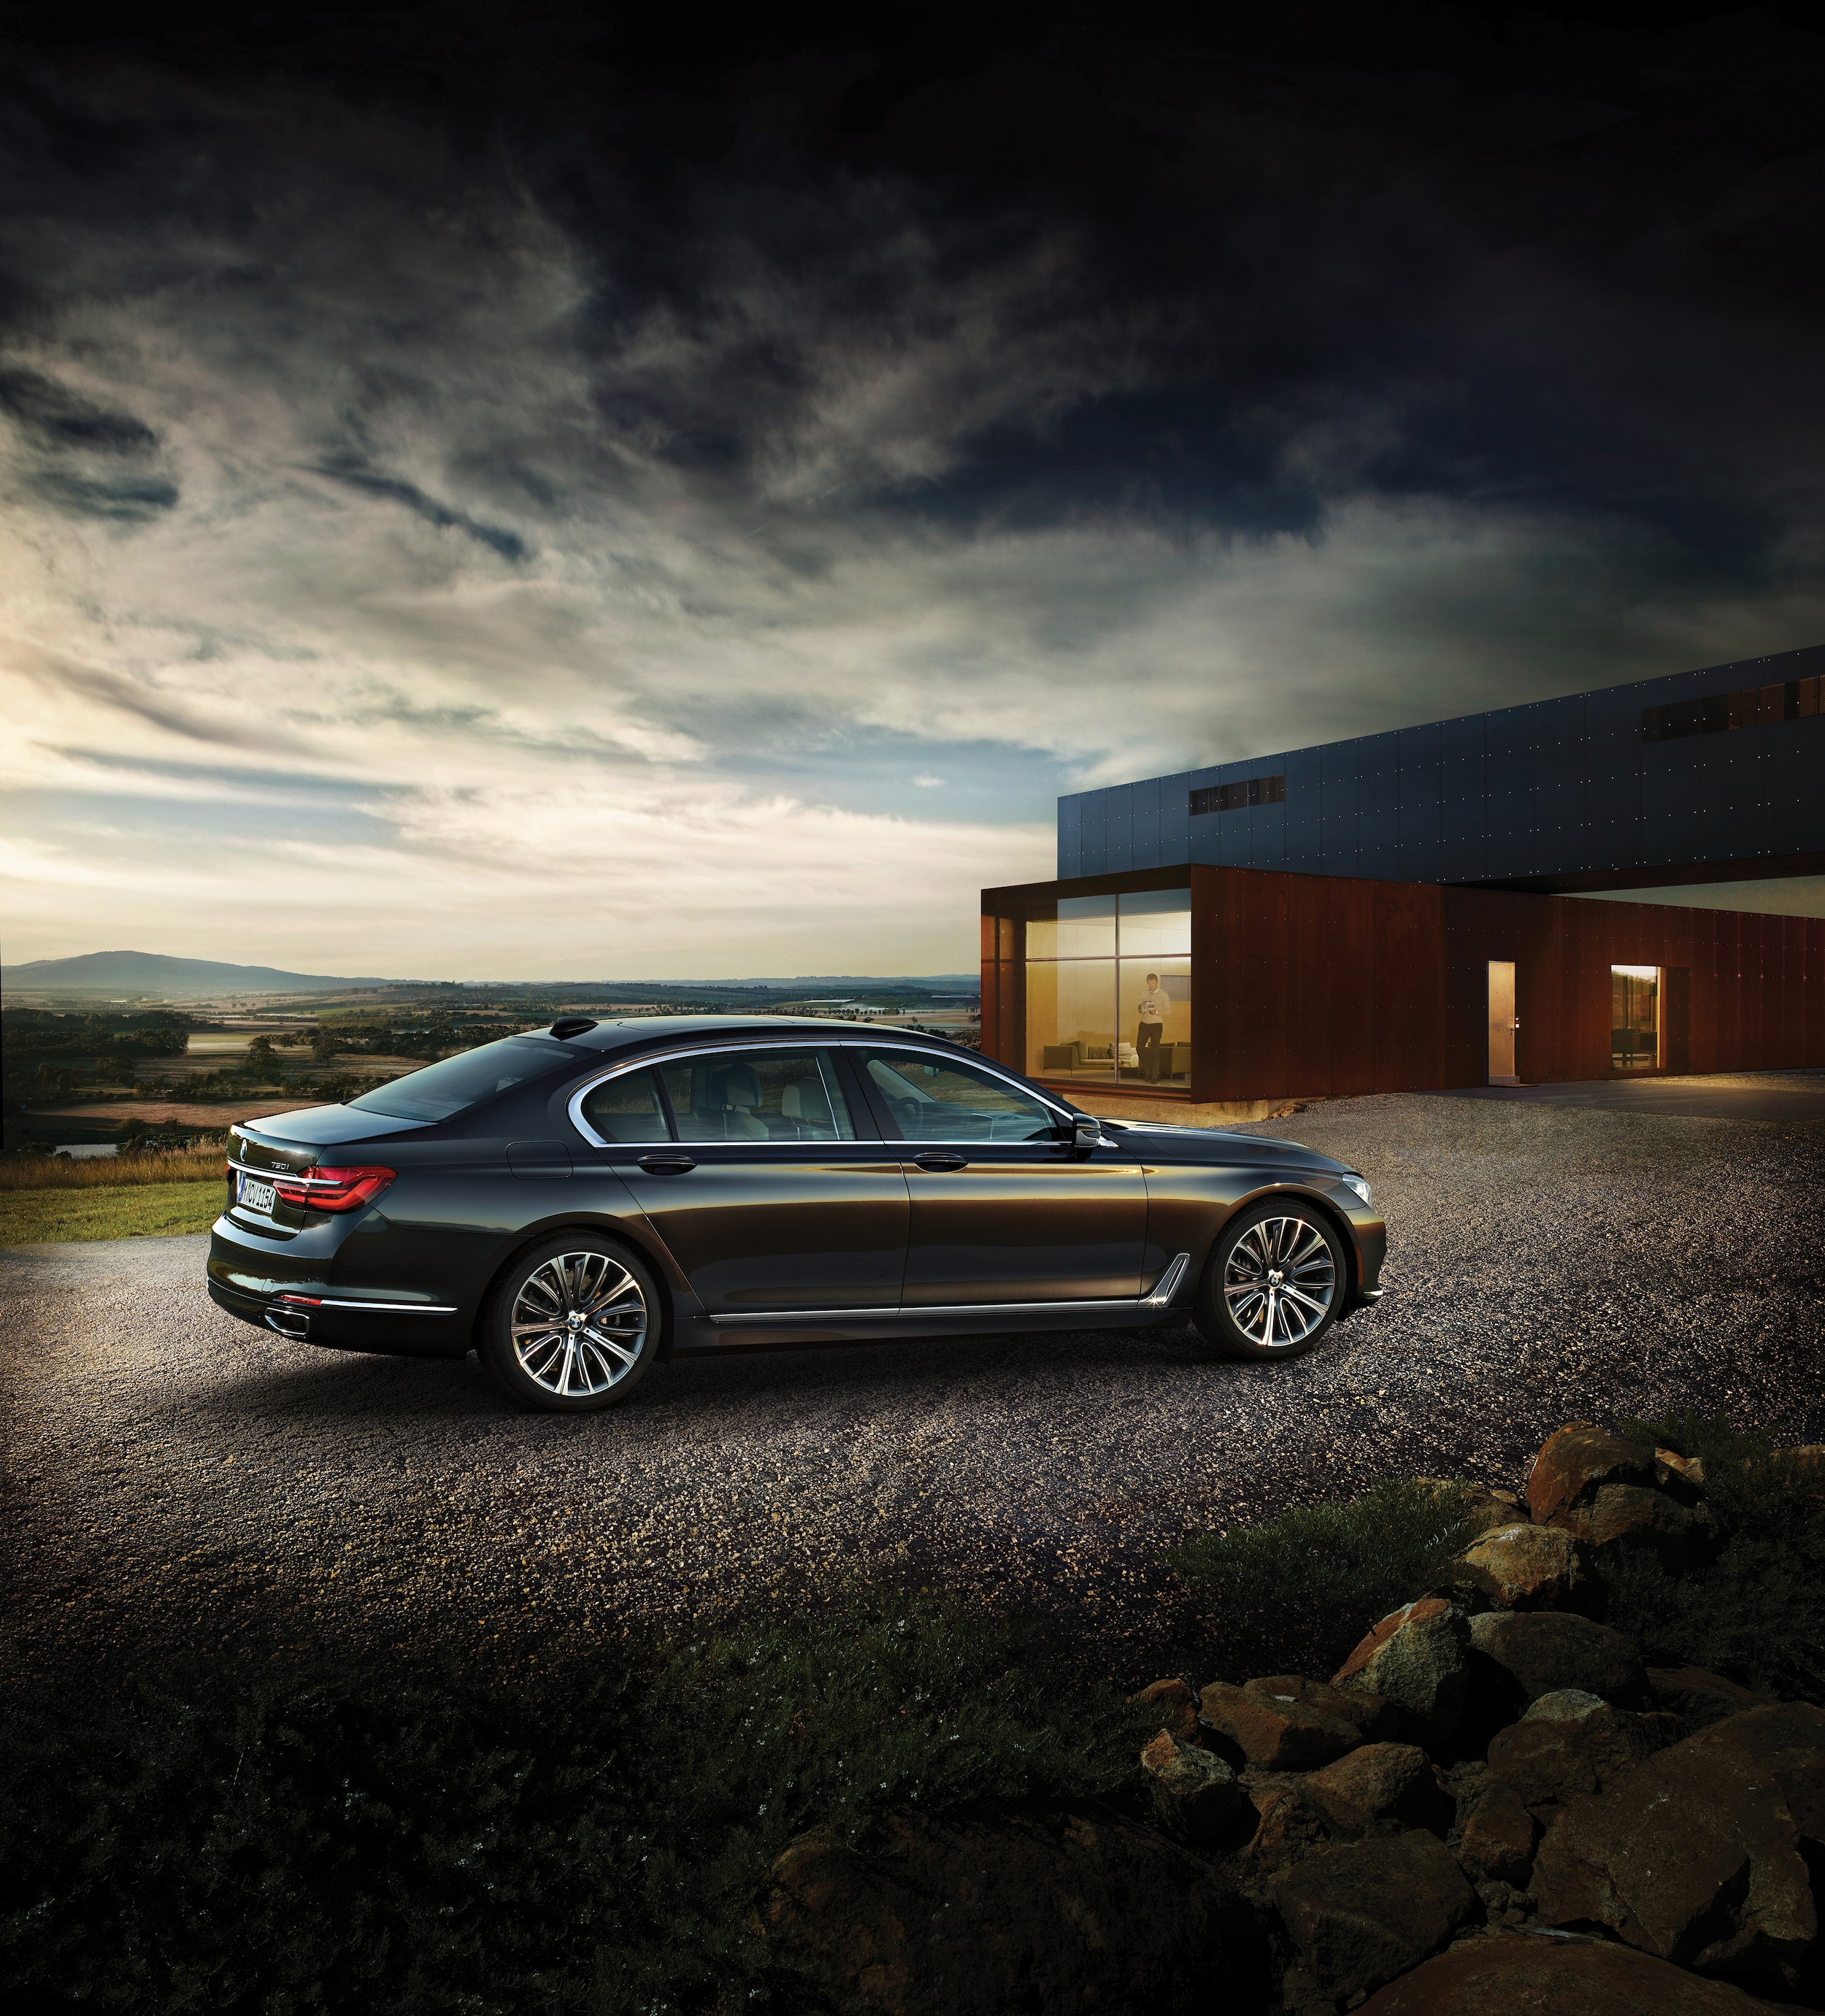 New BMW 7 Series For Sale in O'Fallon, IL | Newbold BMW